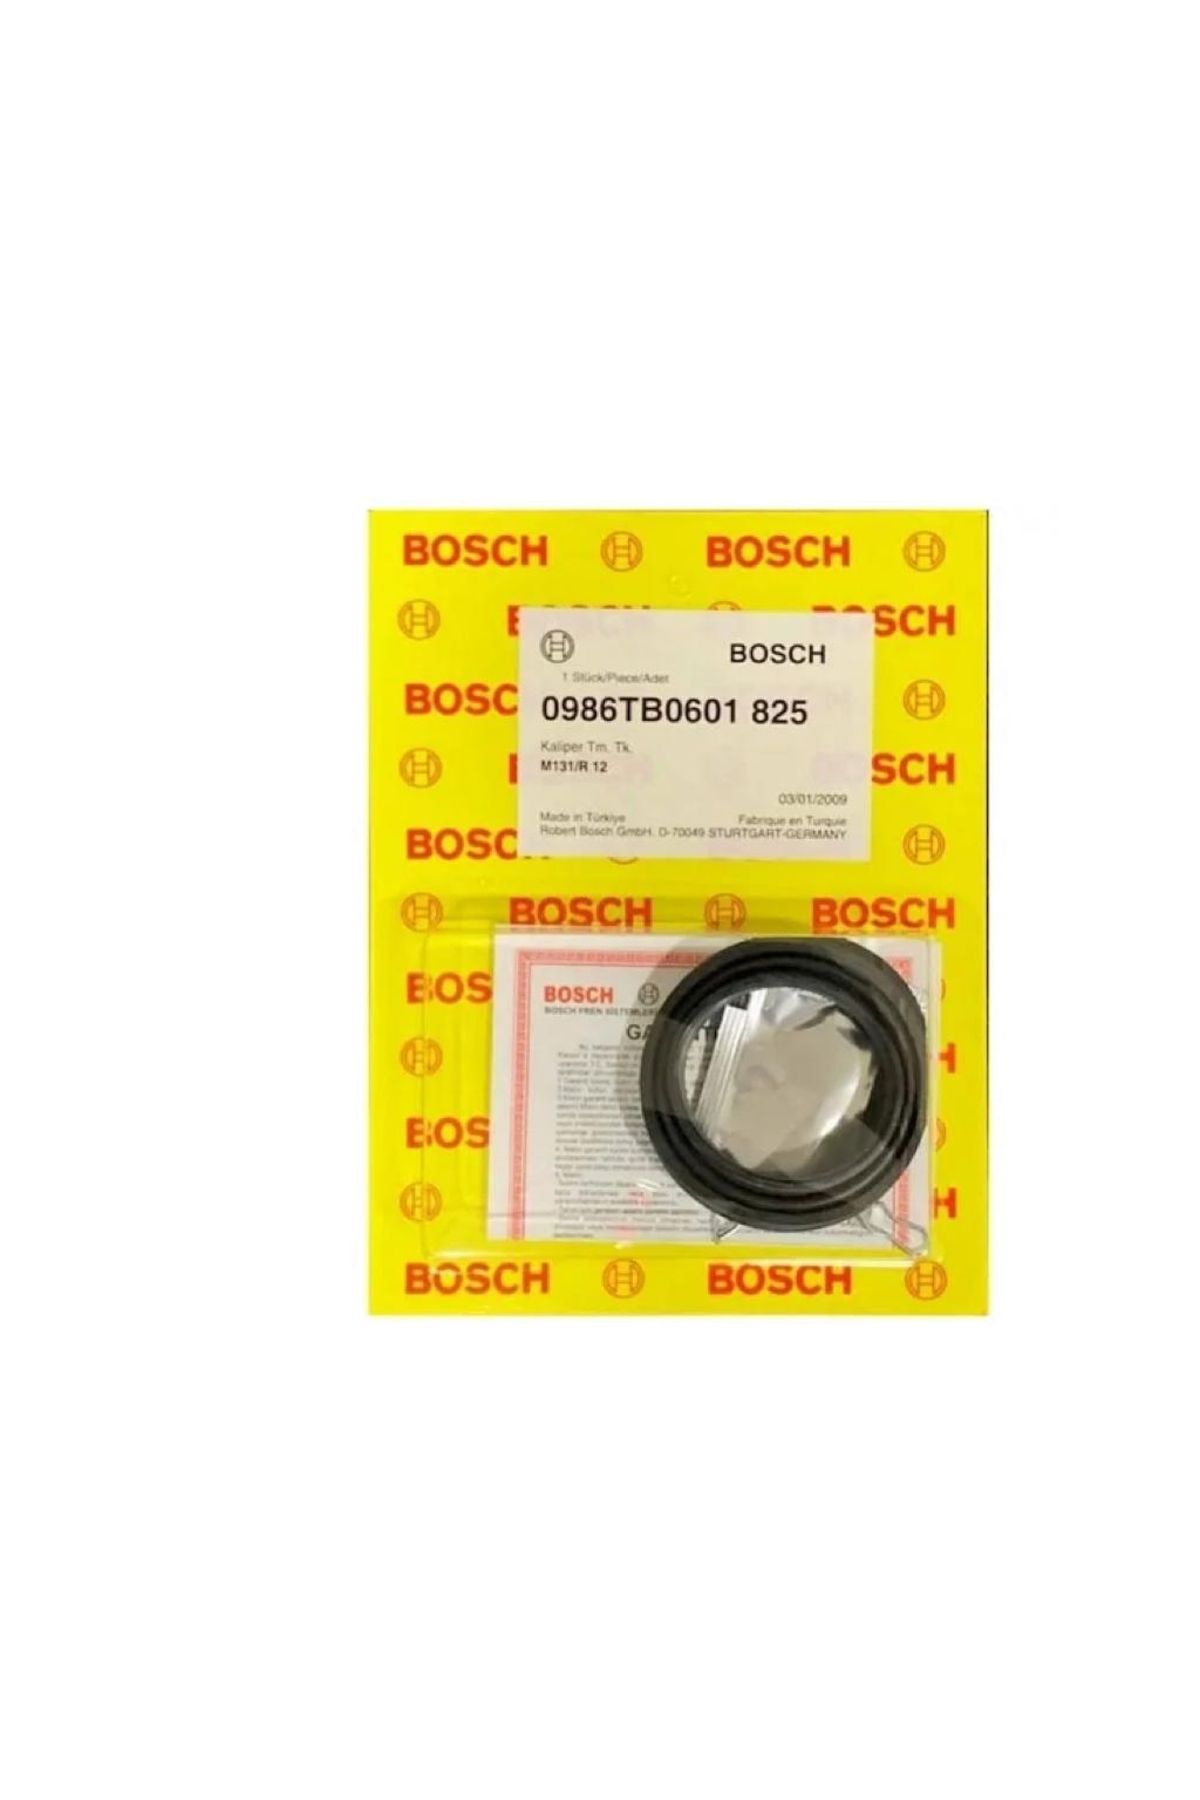 Bosch TOFAŞ DOĞAN KARTAL ŞAHİN RENAULT 12 KALİPER TAMİR TAKIMI